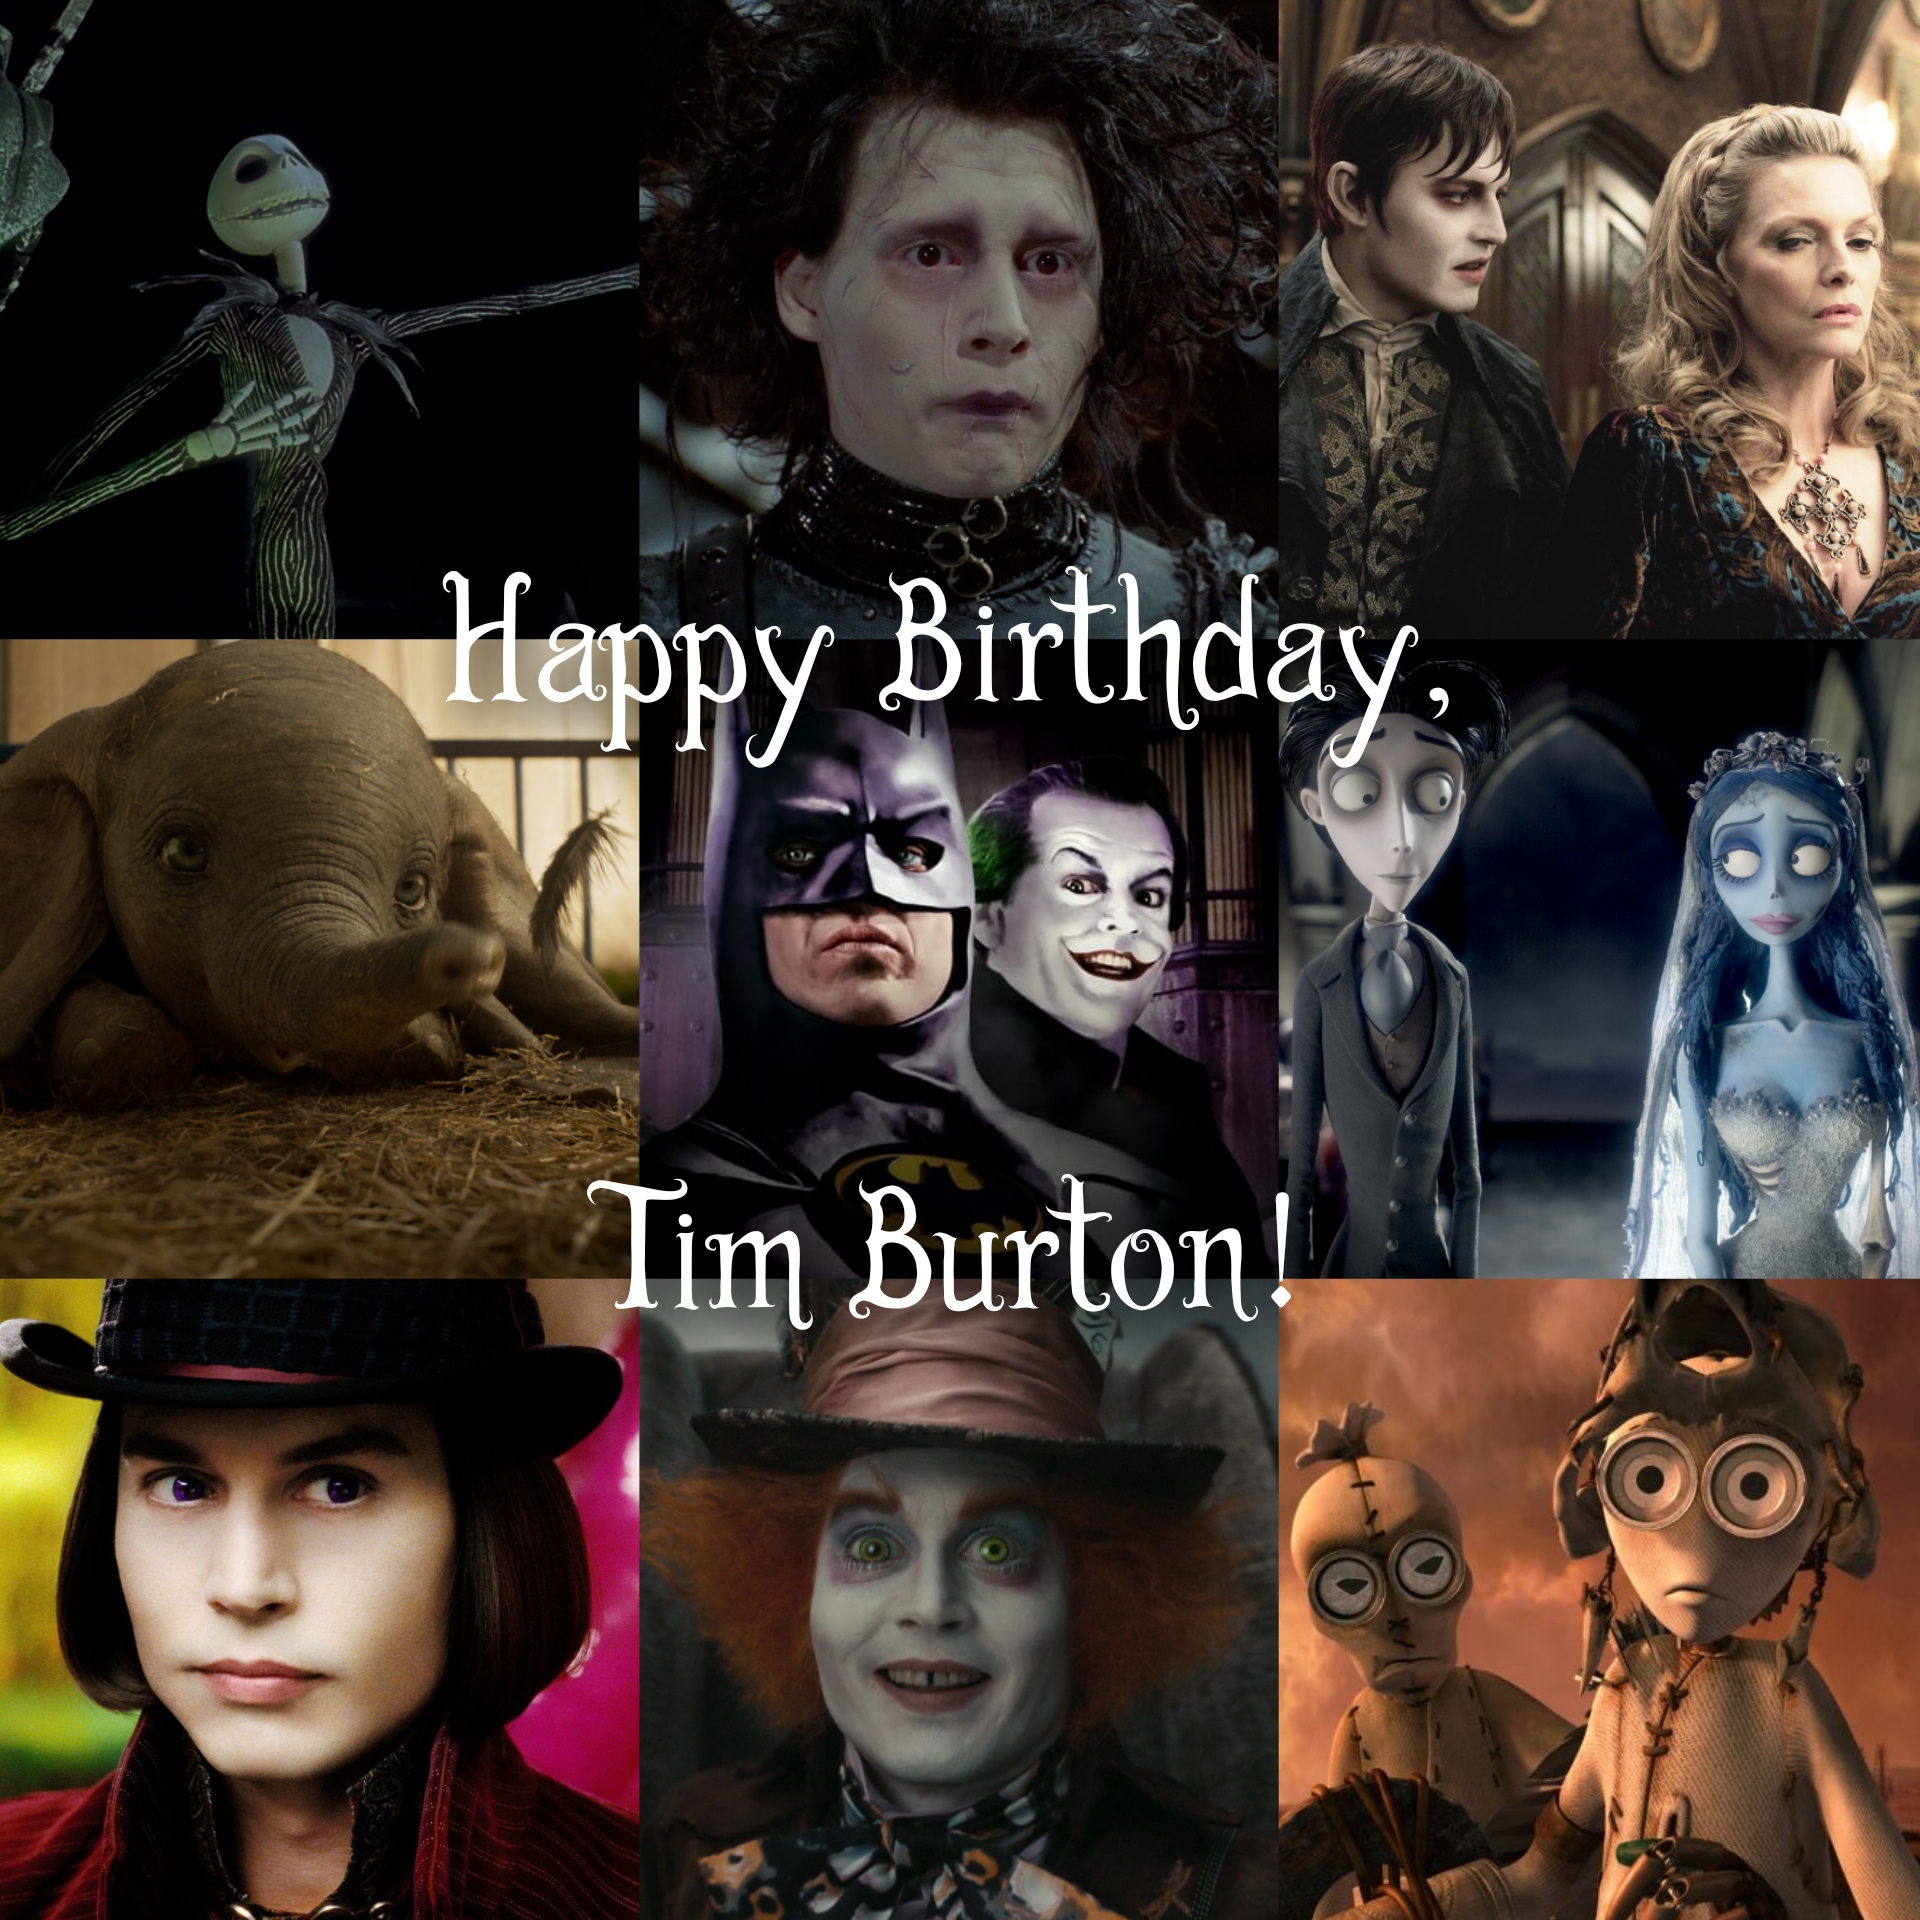 Collage for Tim Burton's Birthday by LionGuardKujenga on DeviantArt